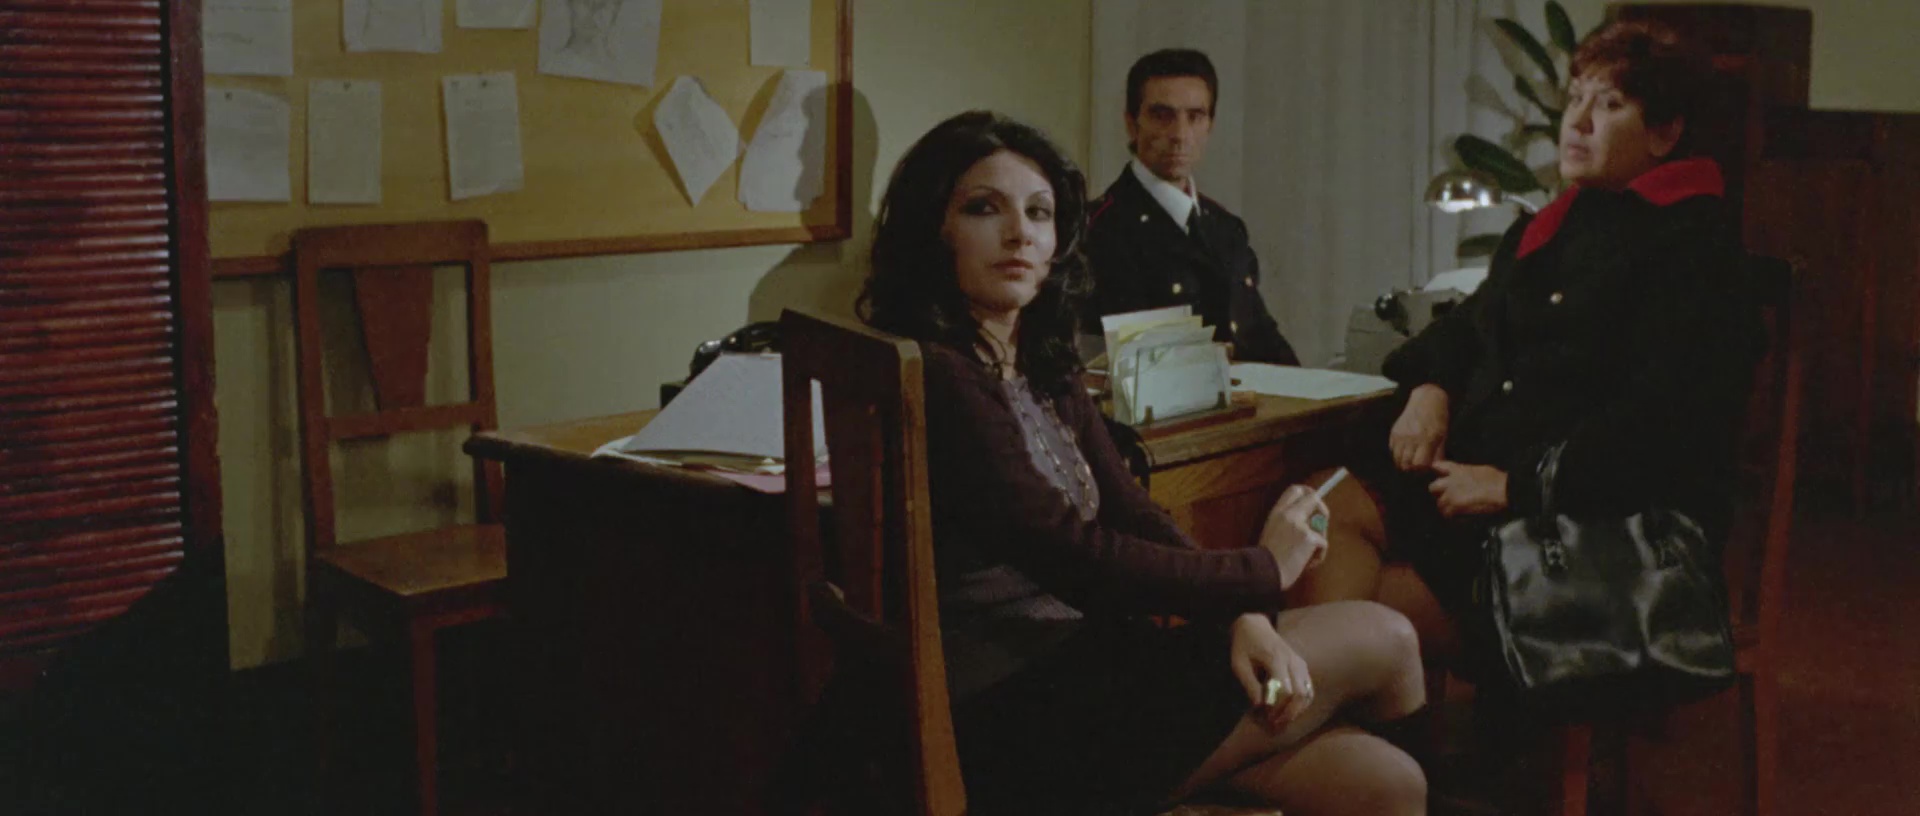 Execution Squad (1972) Screenshot 4 